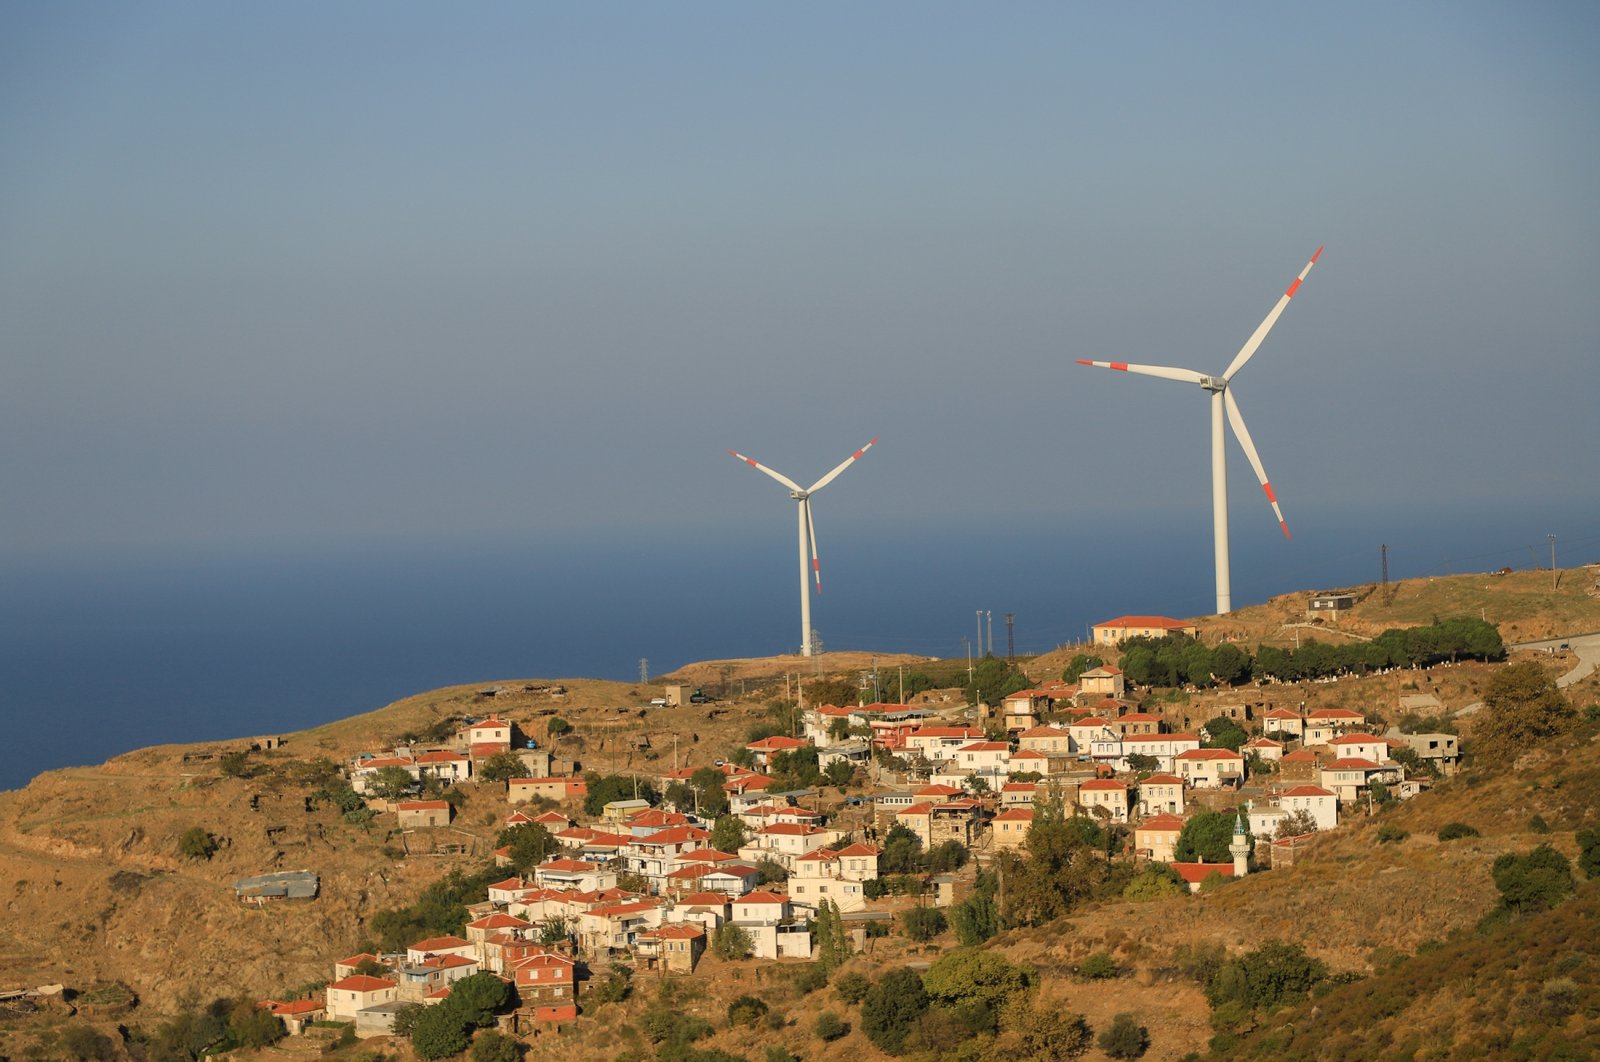 Wind turbines are seen in the Karaburun district of Turkey's Aegean province of Izmir, April 30, 2021. (Shutterstock Photo)